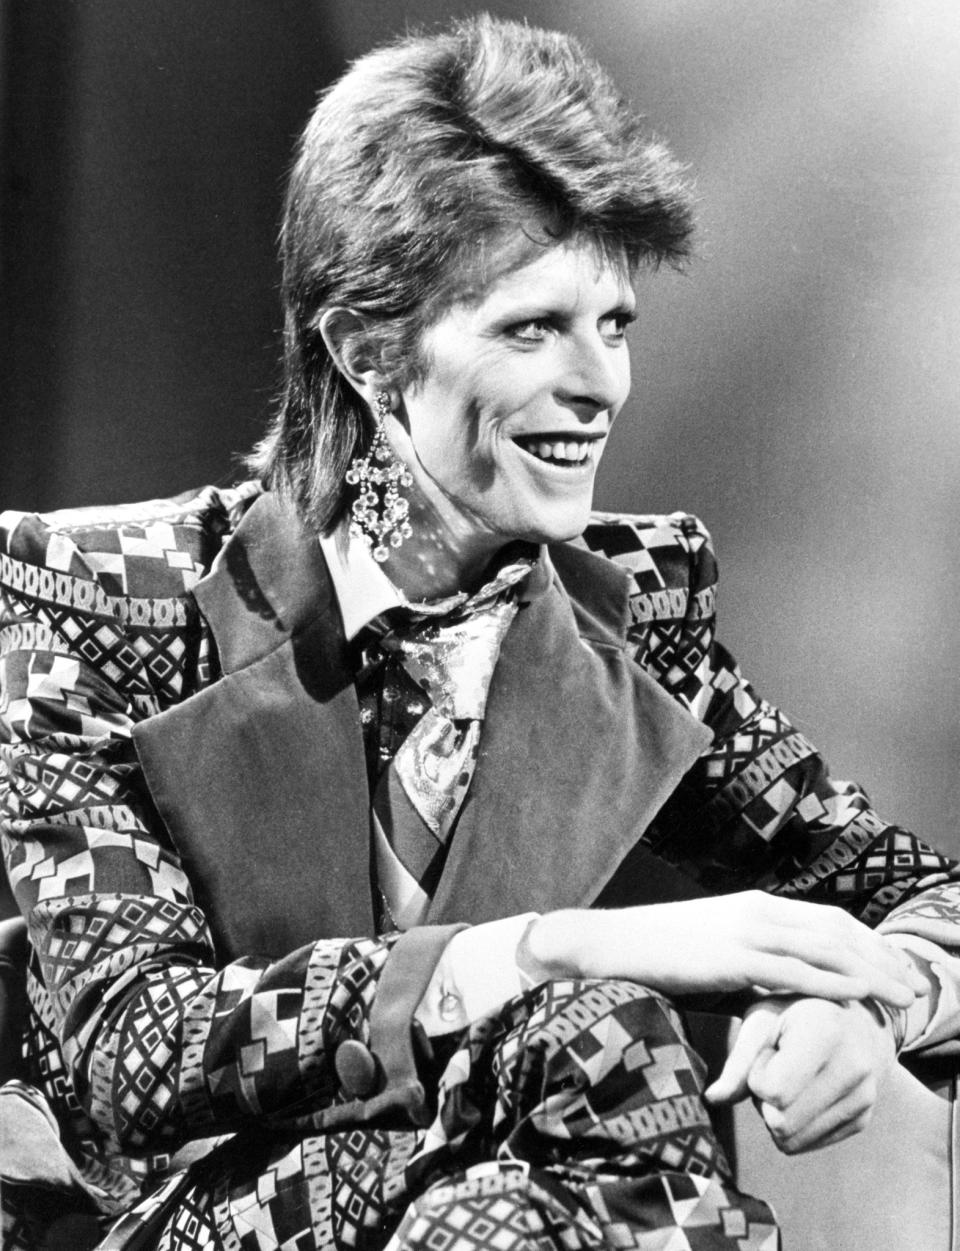 January: David Bowie dies